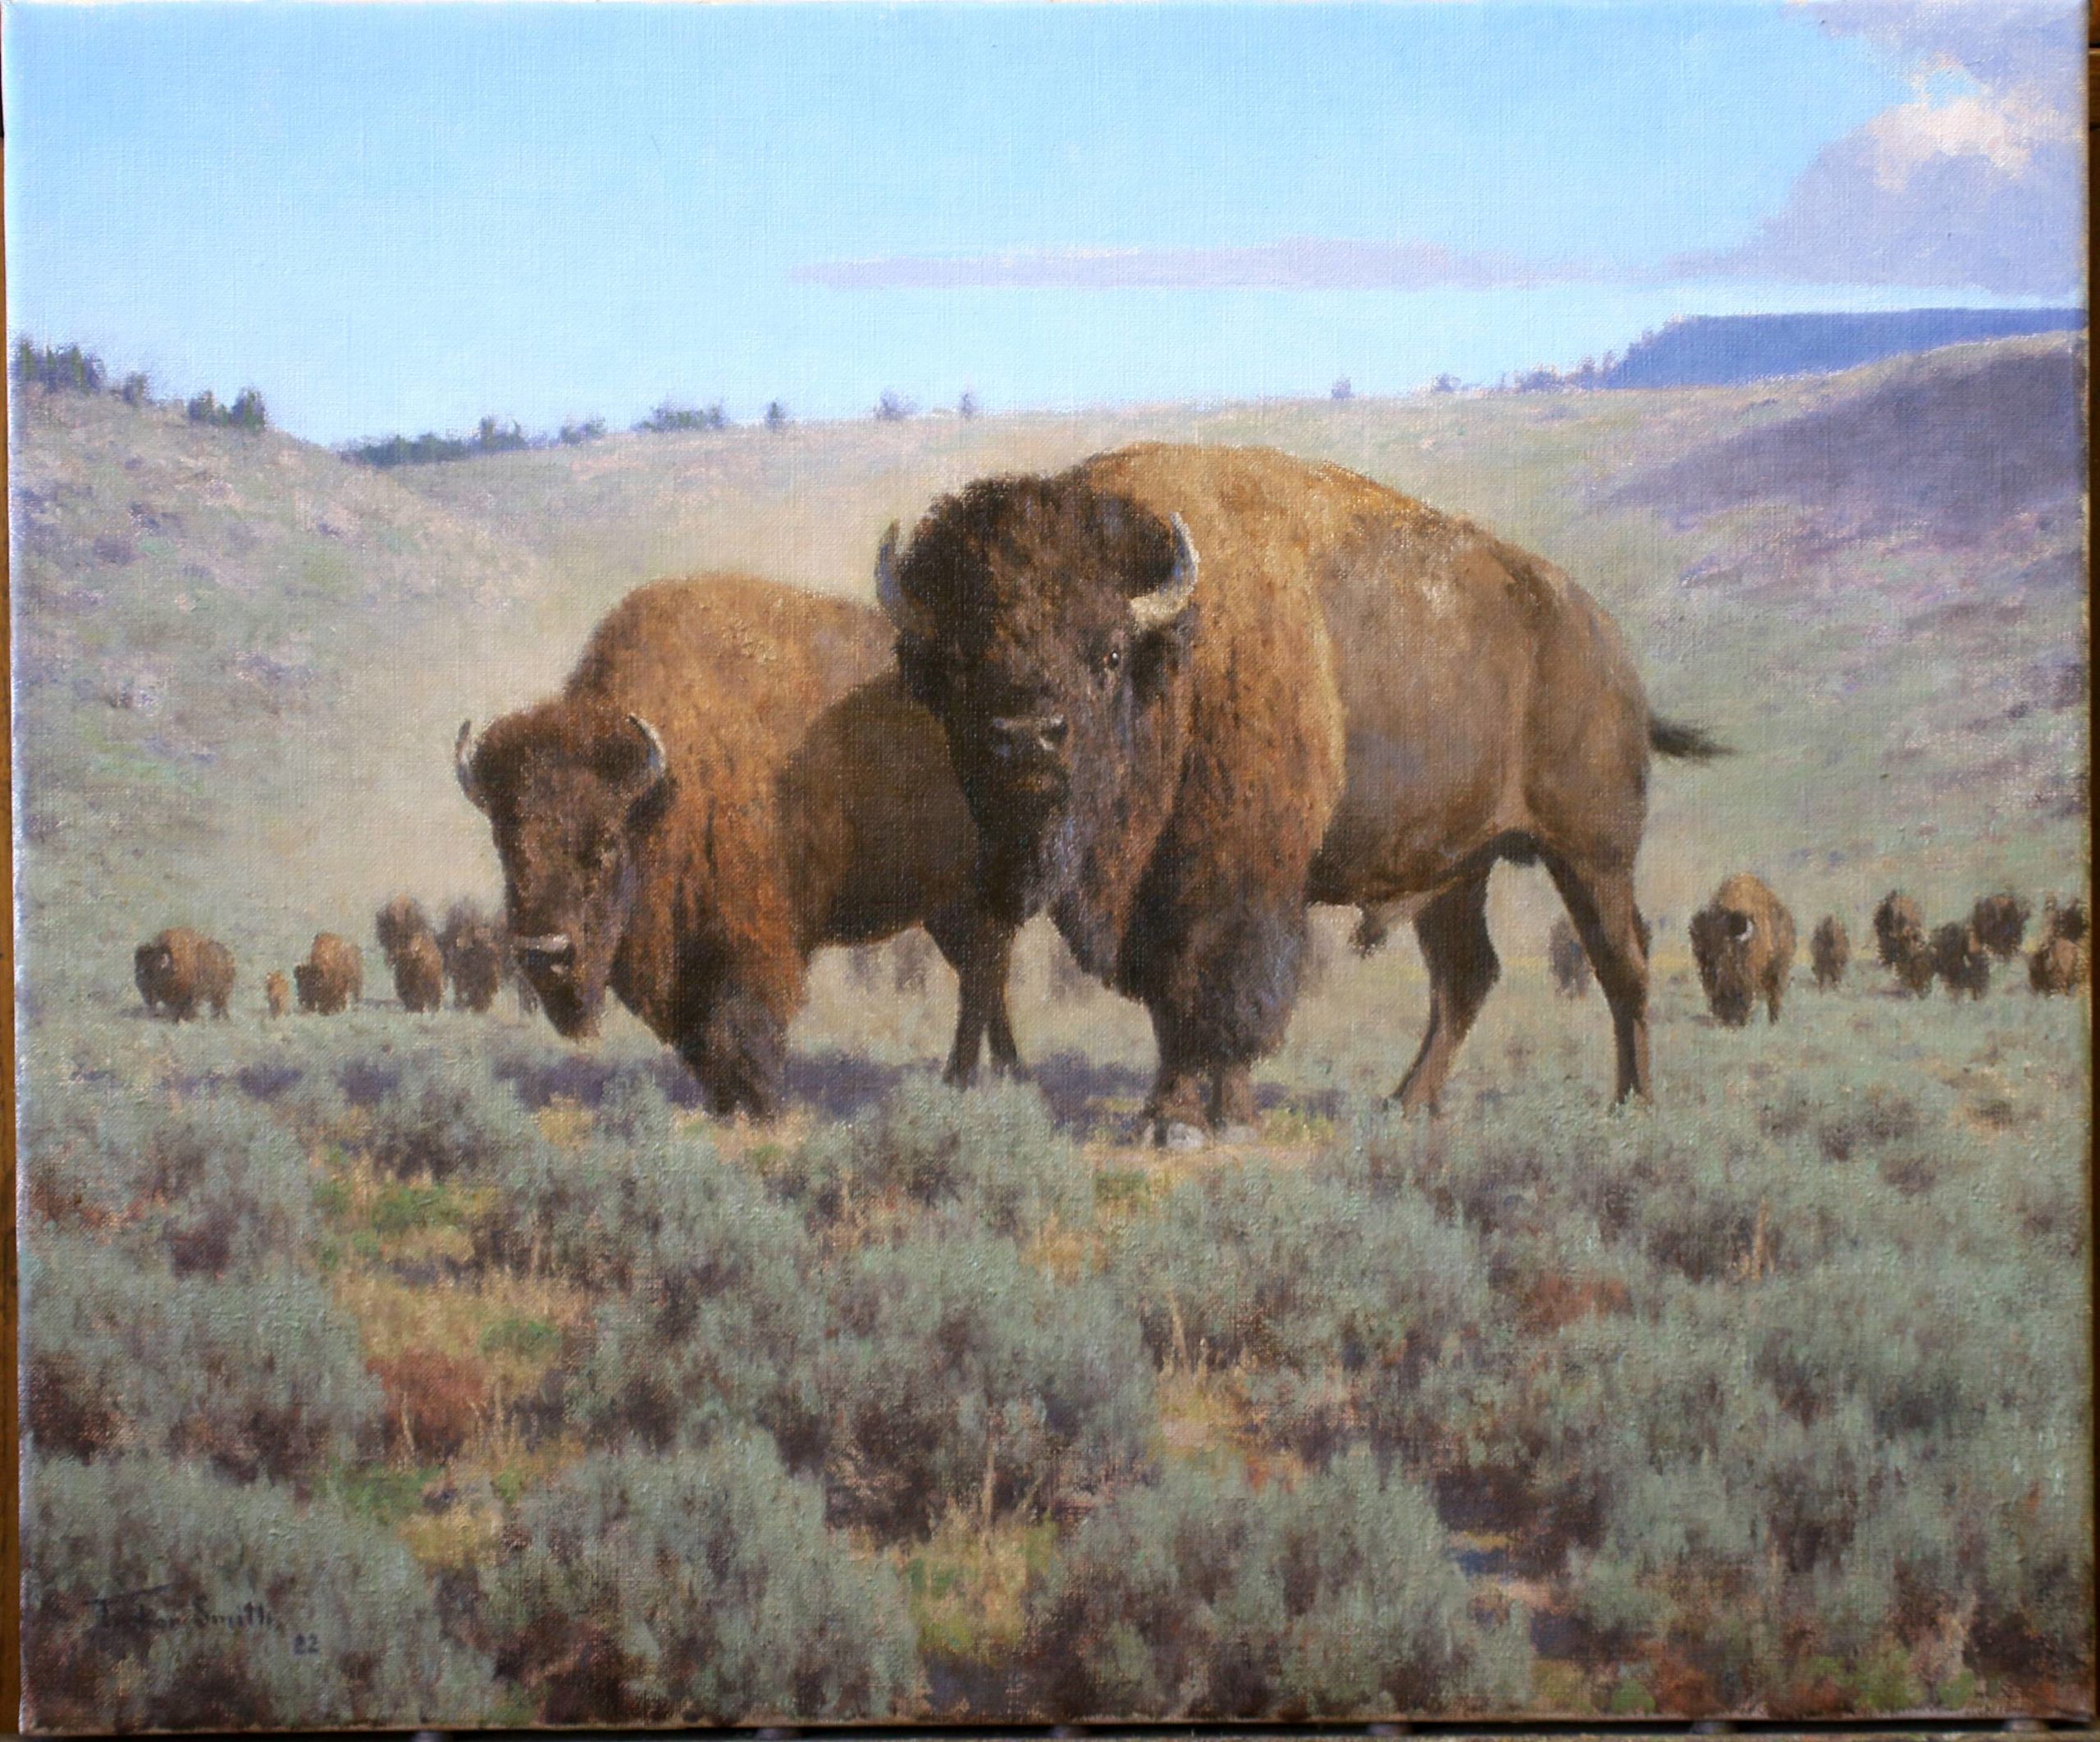 Western Art - “Wyoming Buffalo” by Tucker Smith